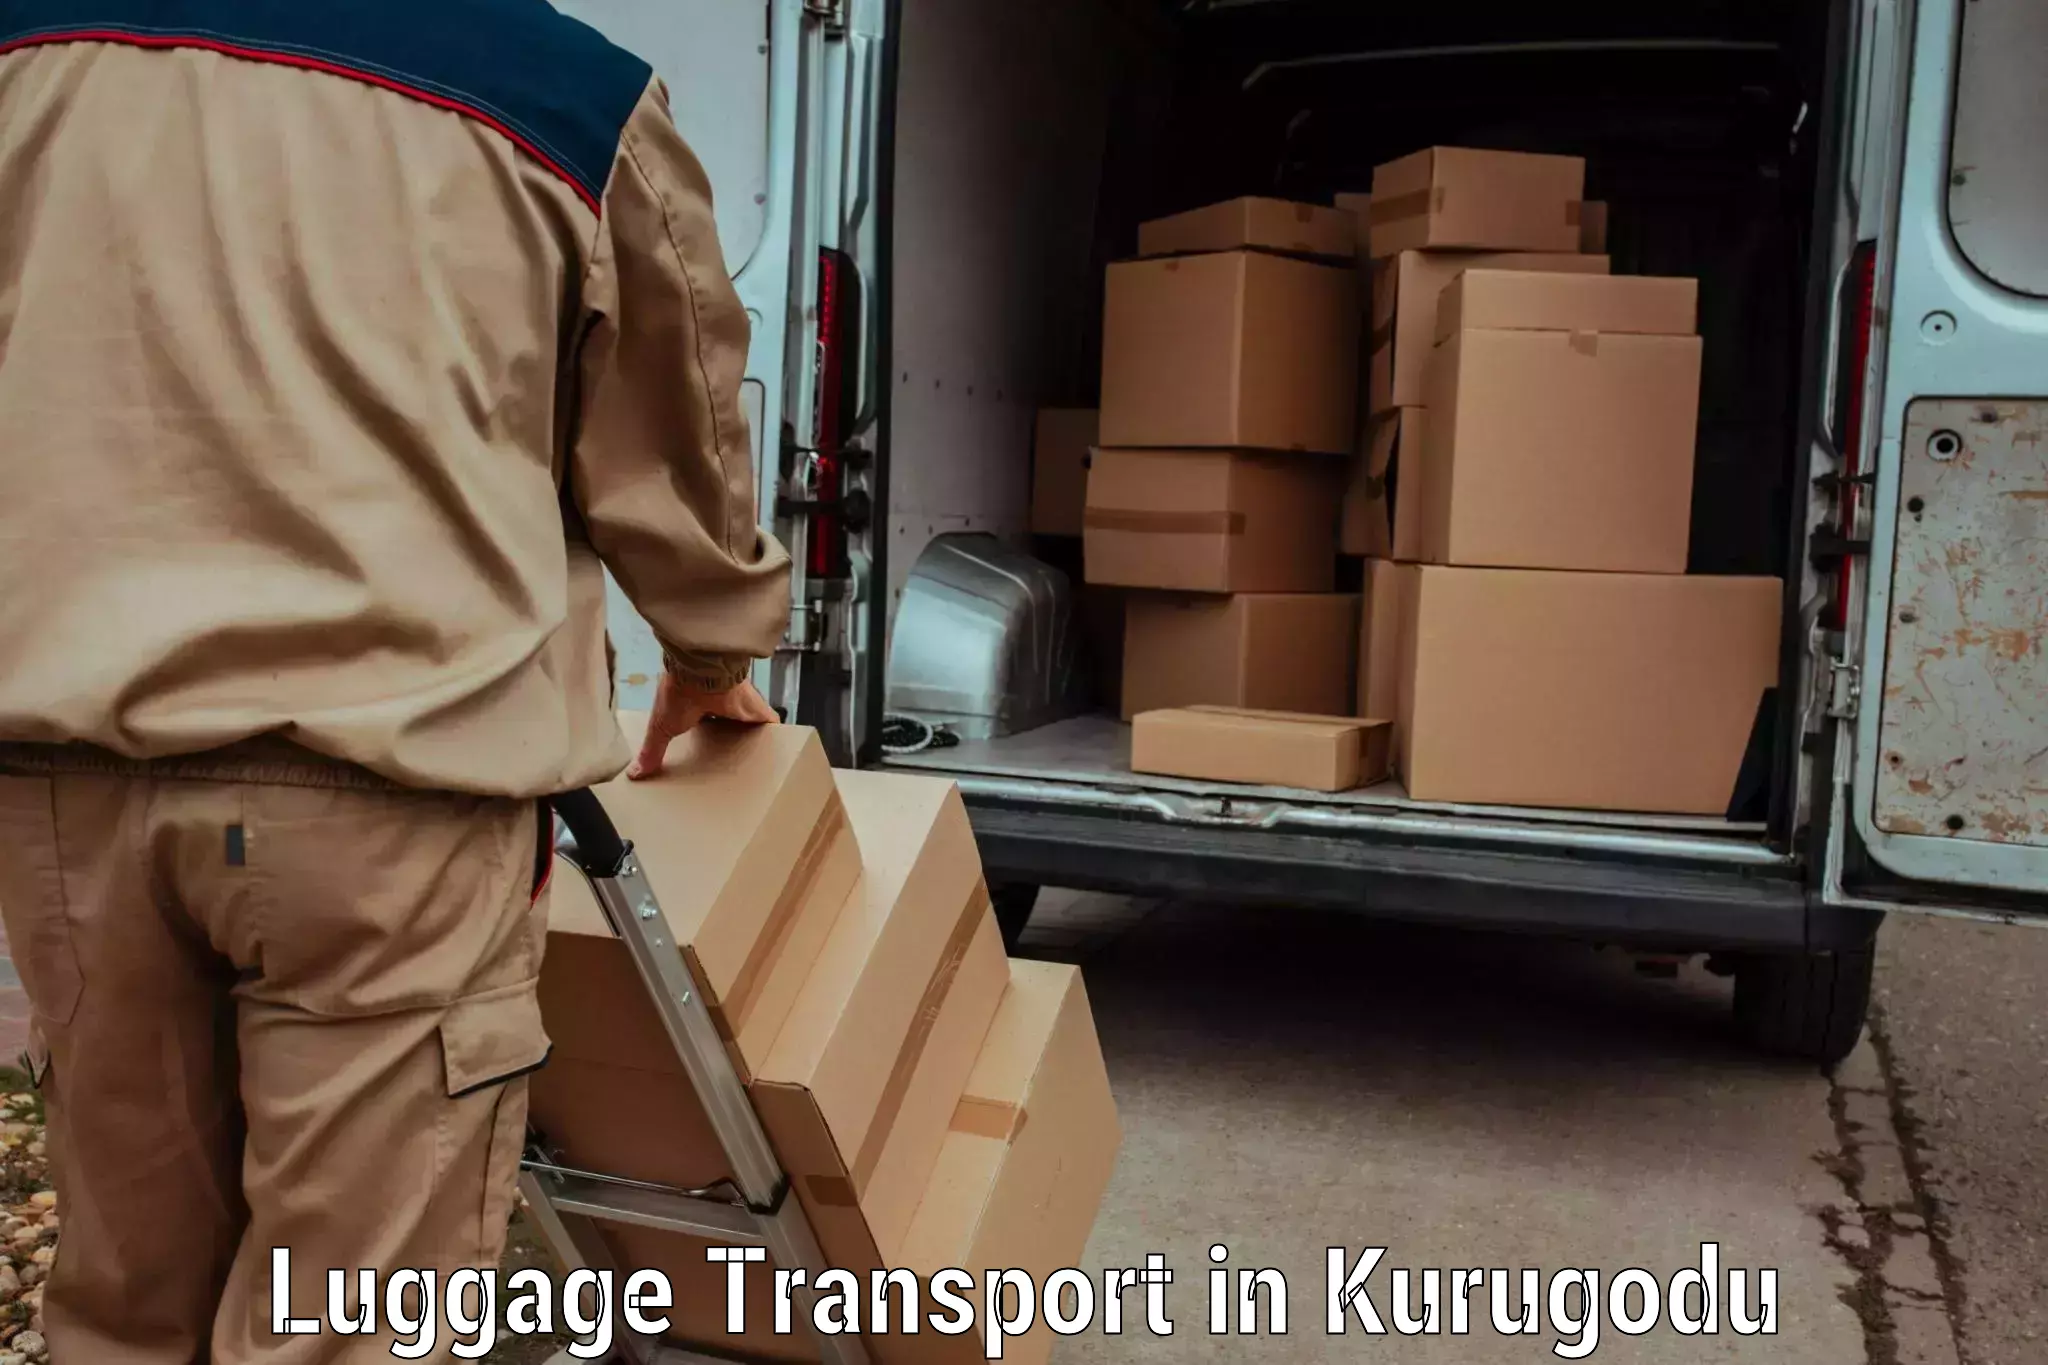 Luggage transport service in Kurugodu